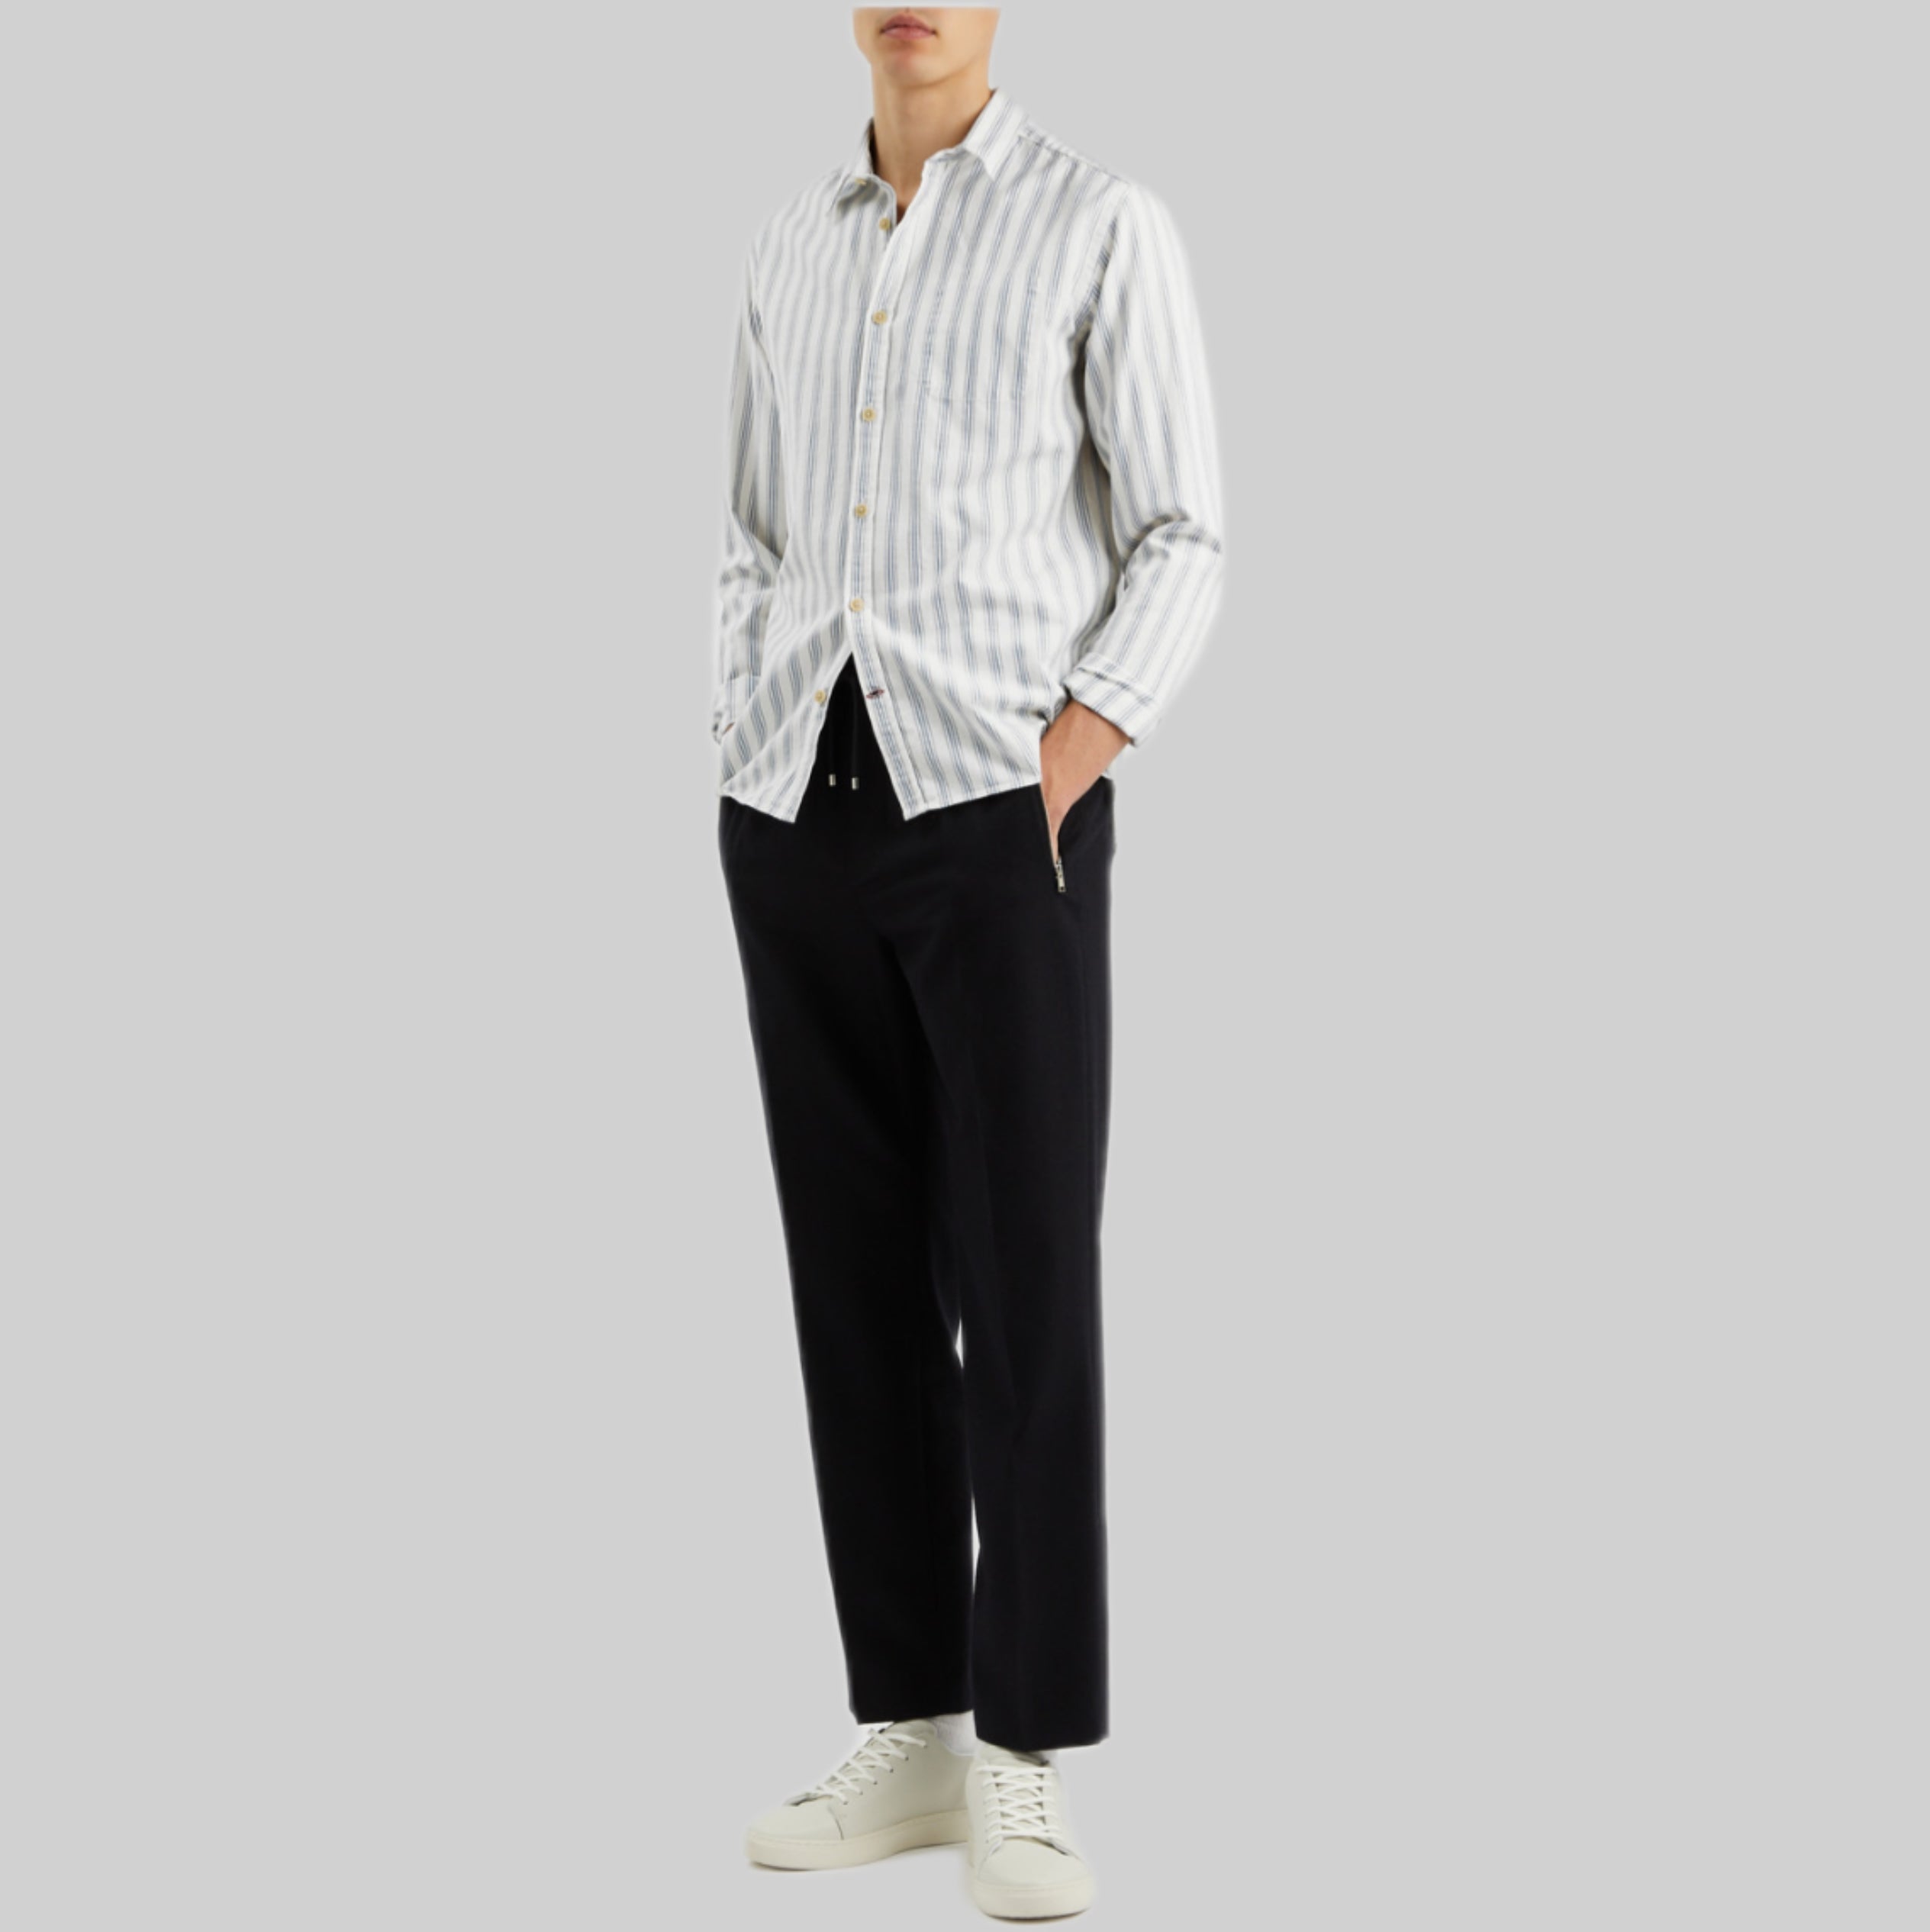 OLIVER SPENCER shirt, men, striped, white, frontsdie, model